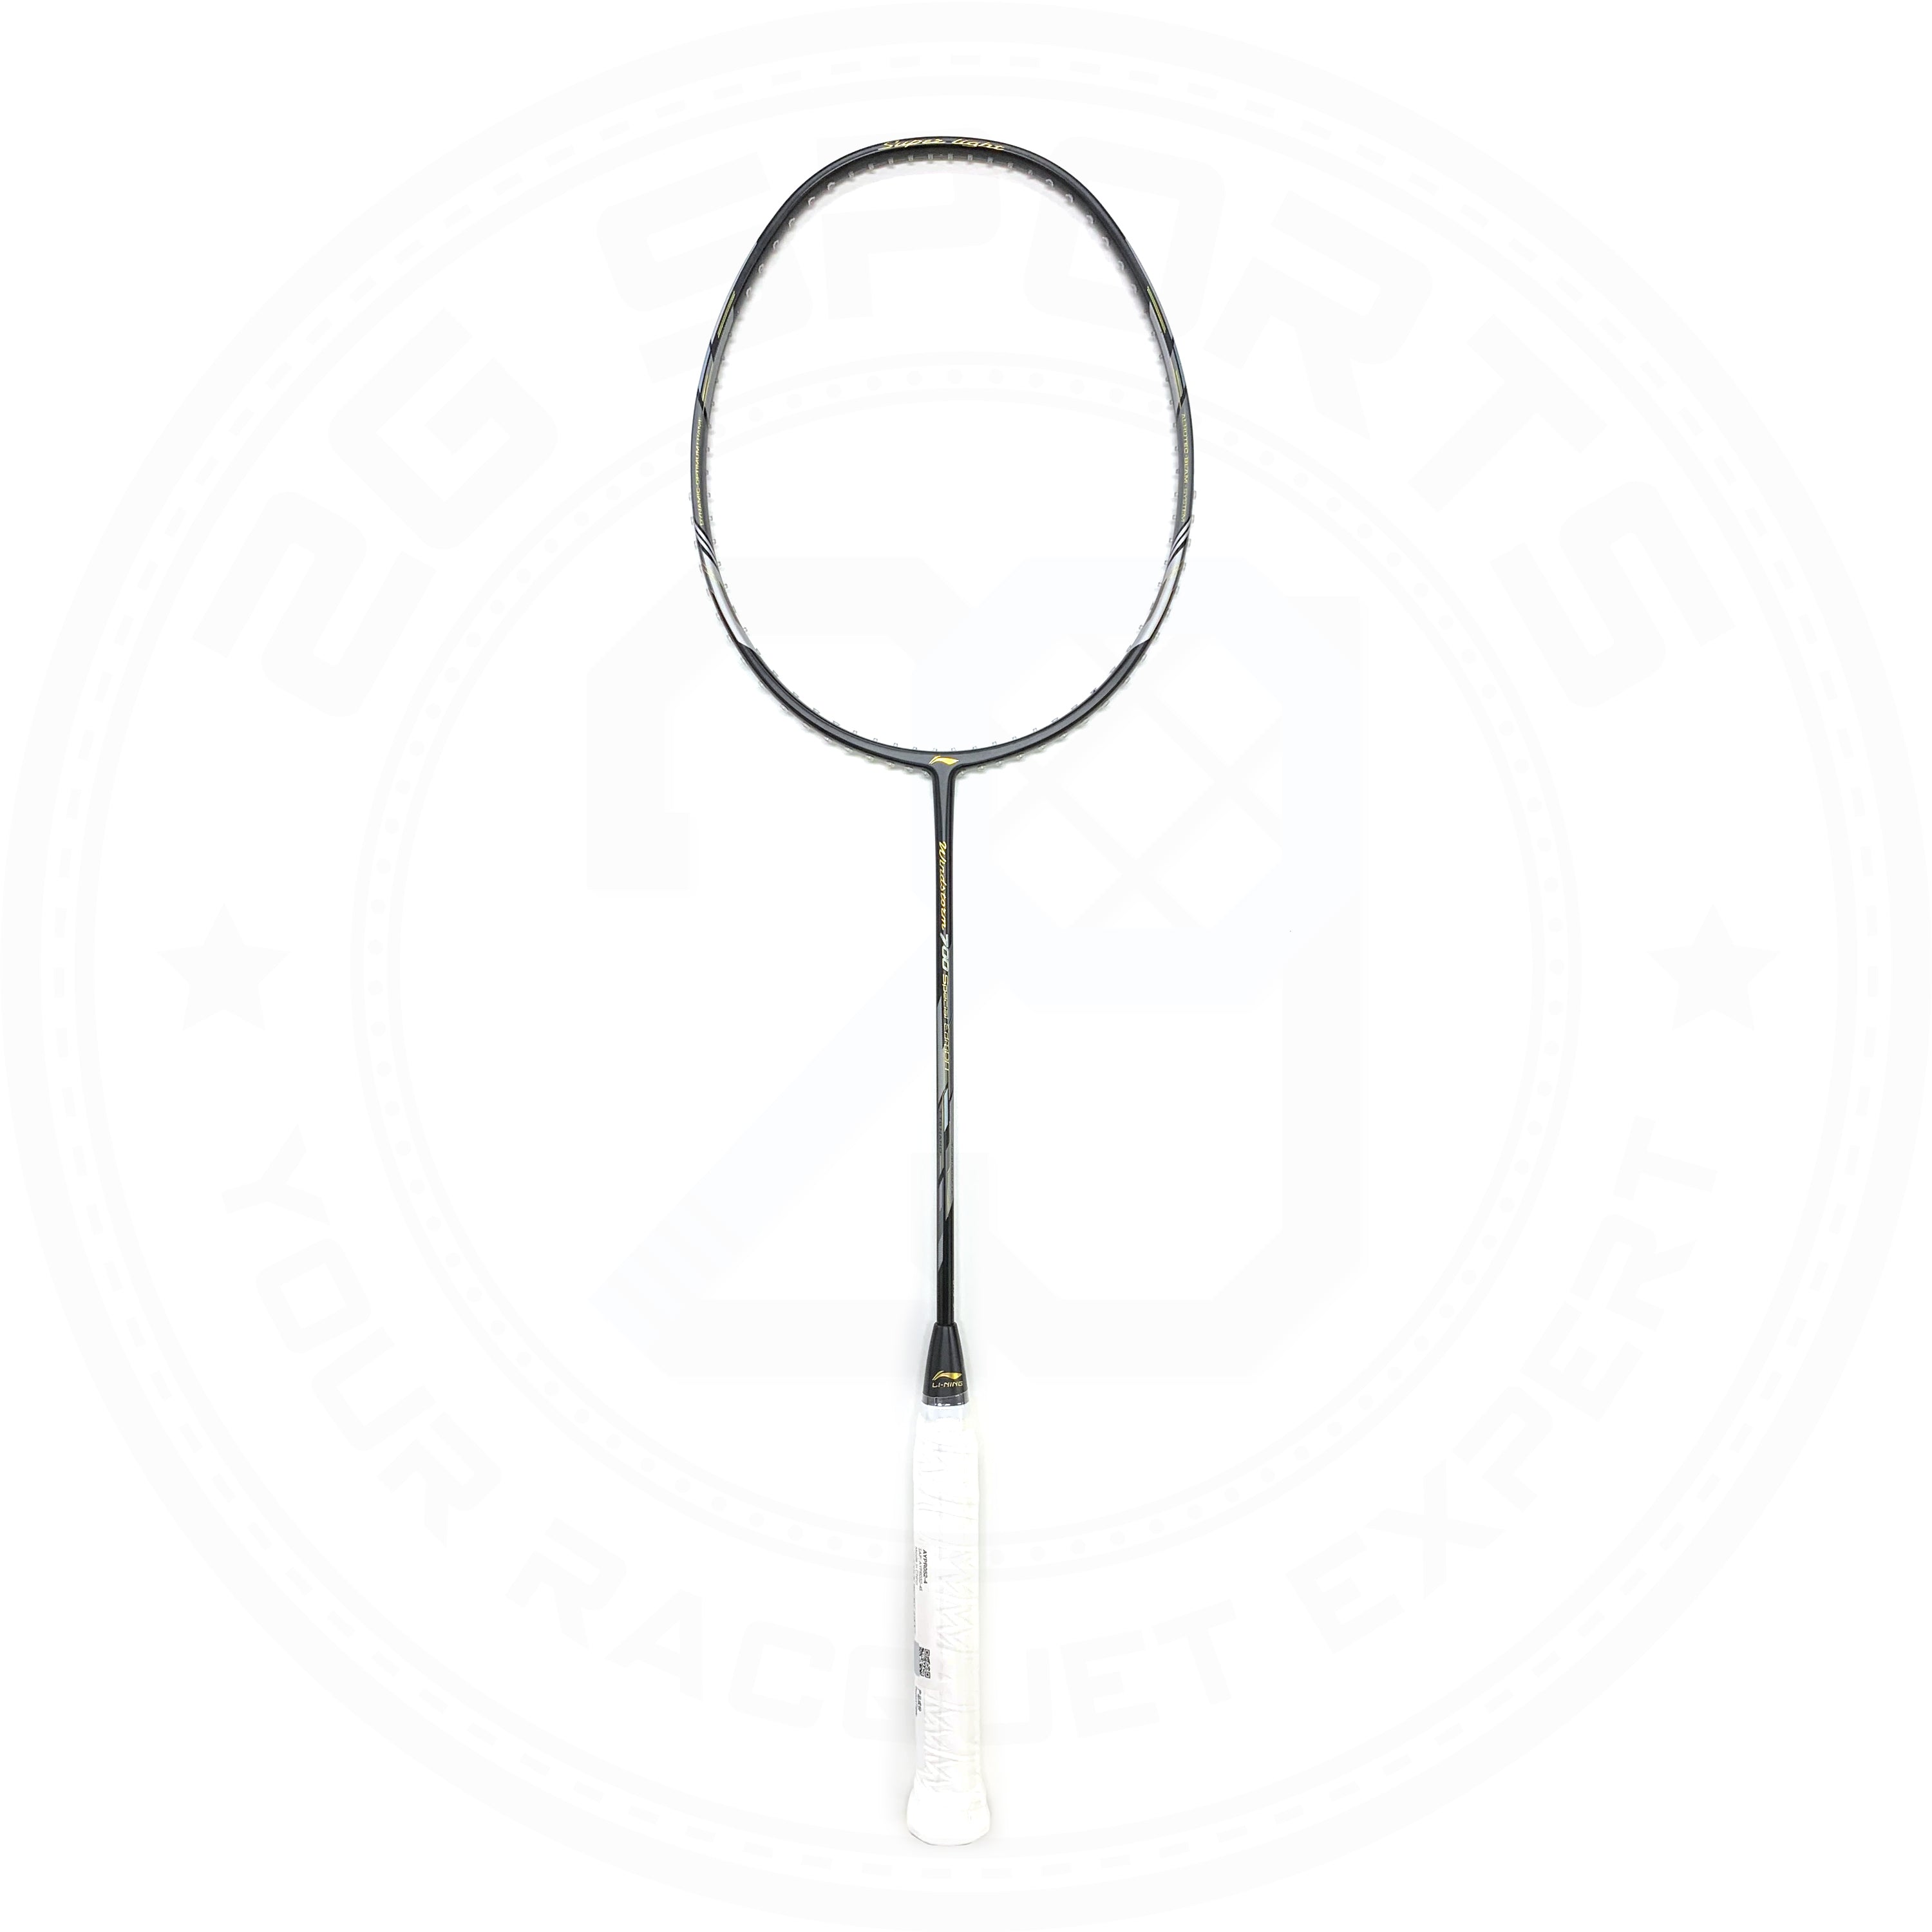 Li-Ning Windstorm 700 Special Edition Badminton Racquet Black 5U(79g)G6